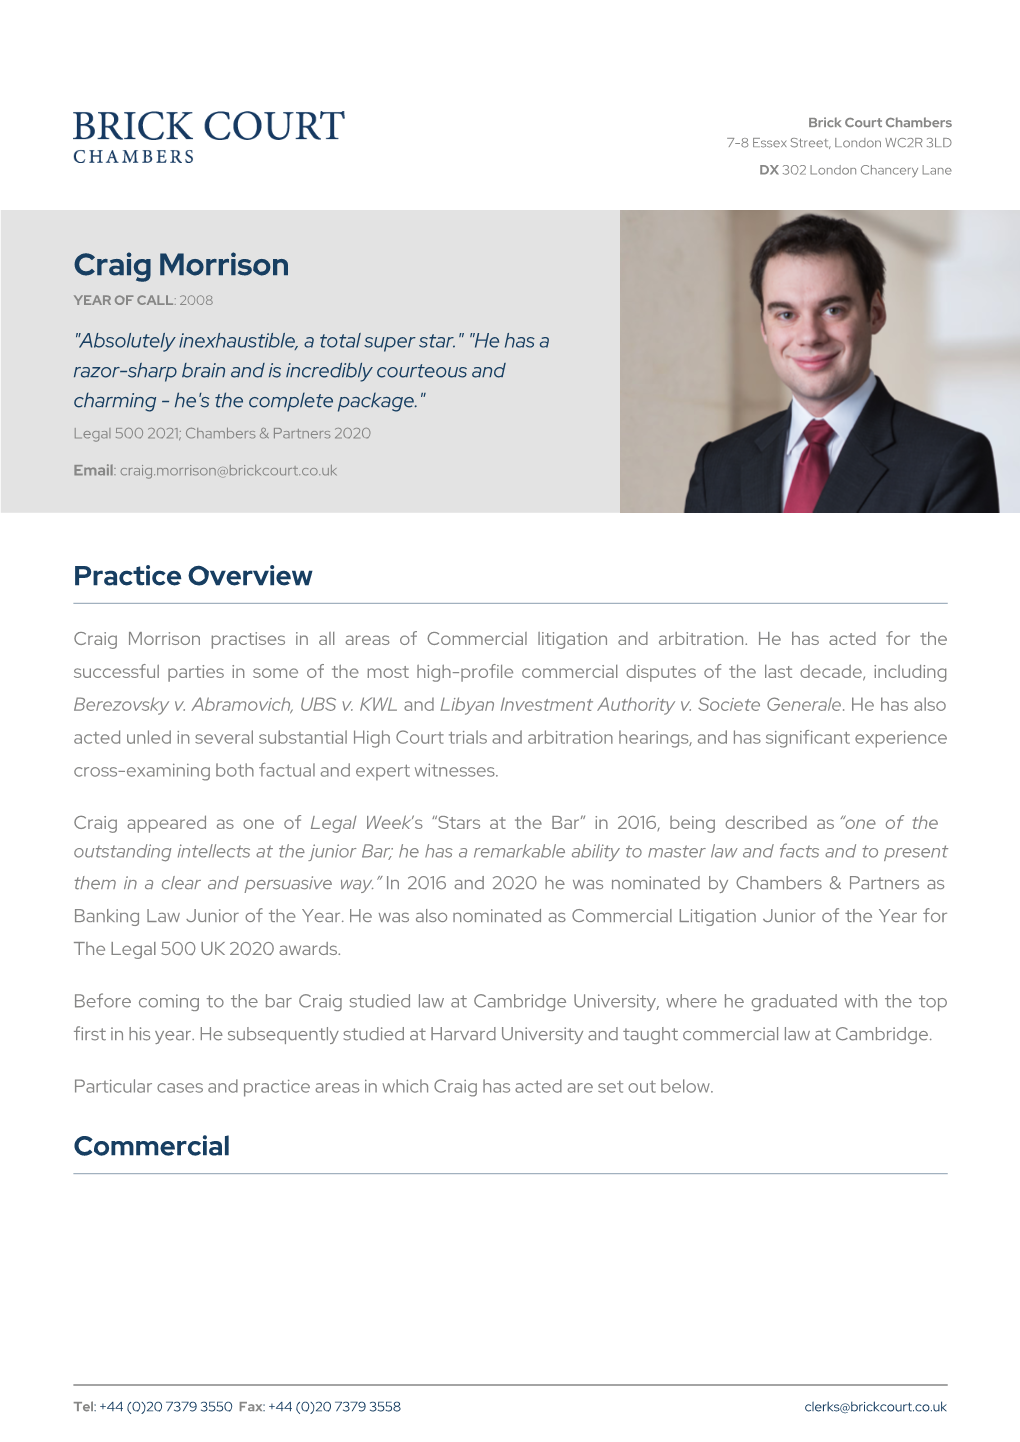 Craig Morrison | Brick Court Chambers